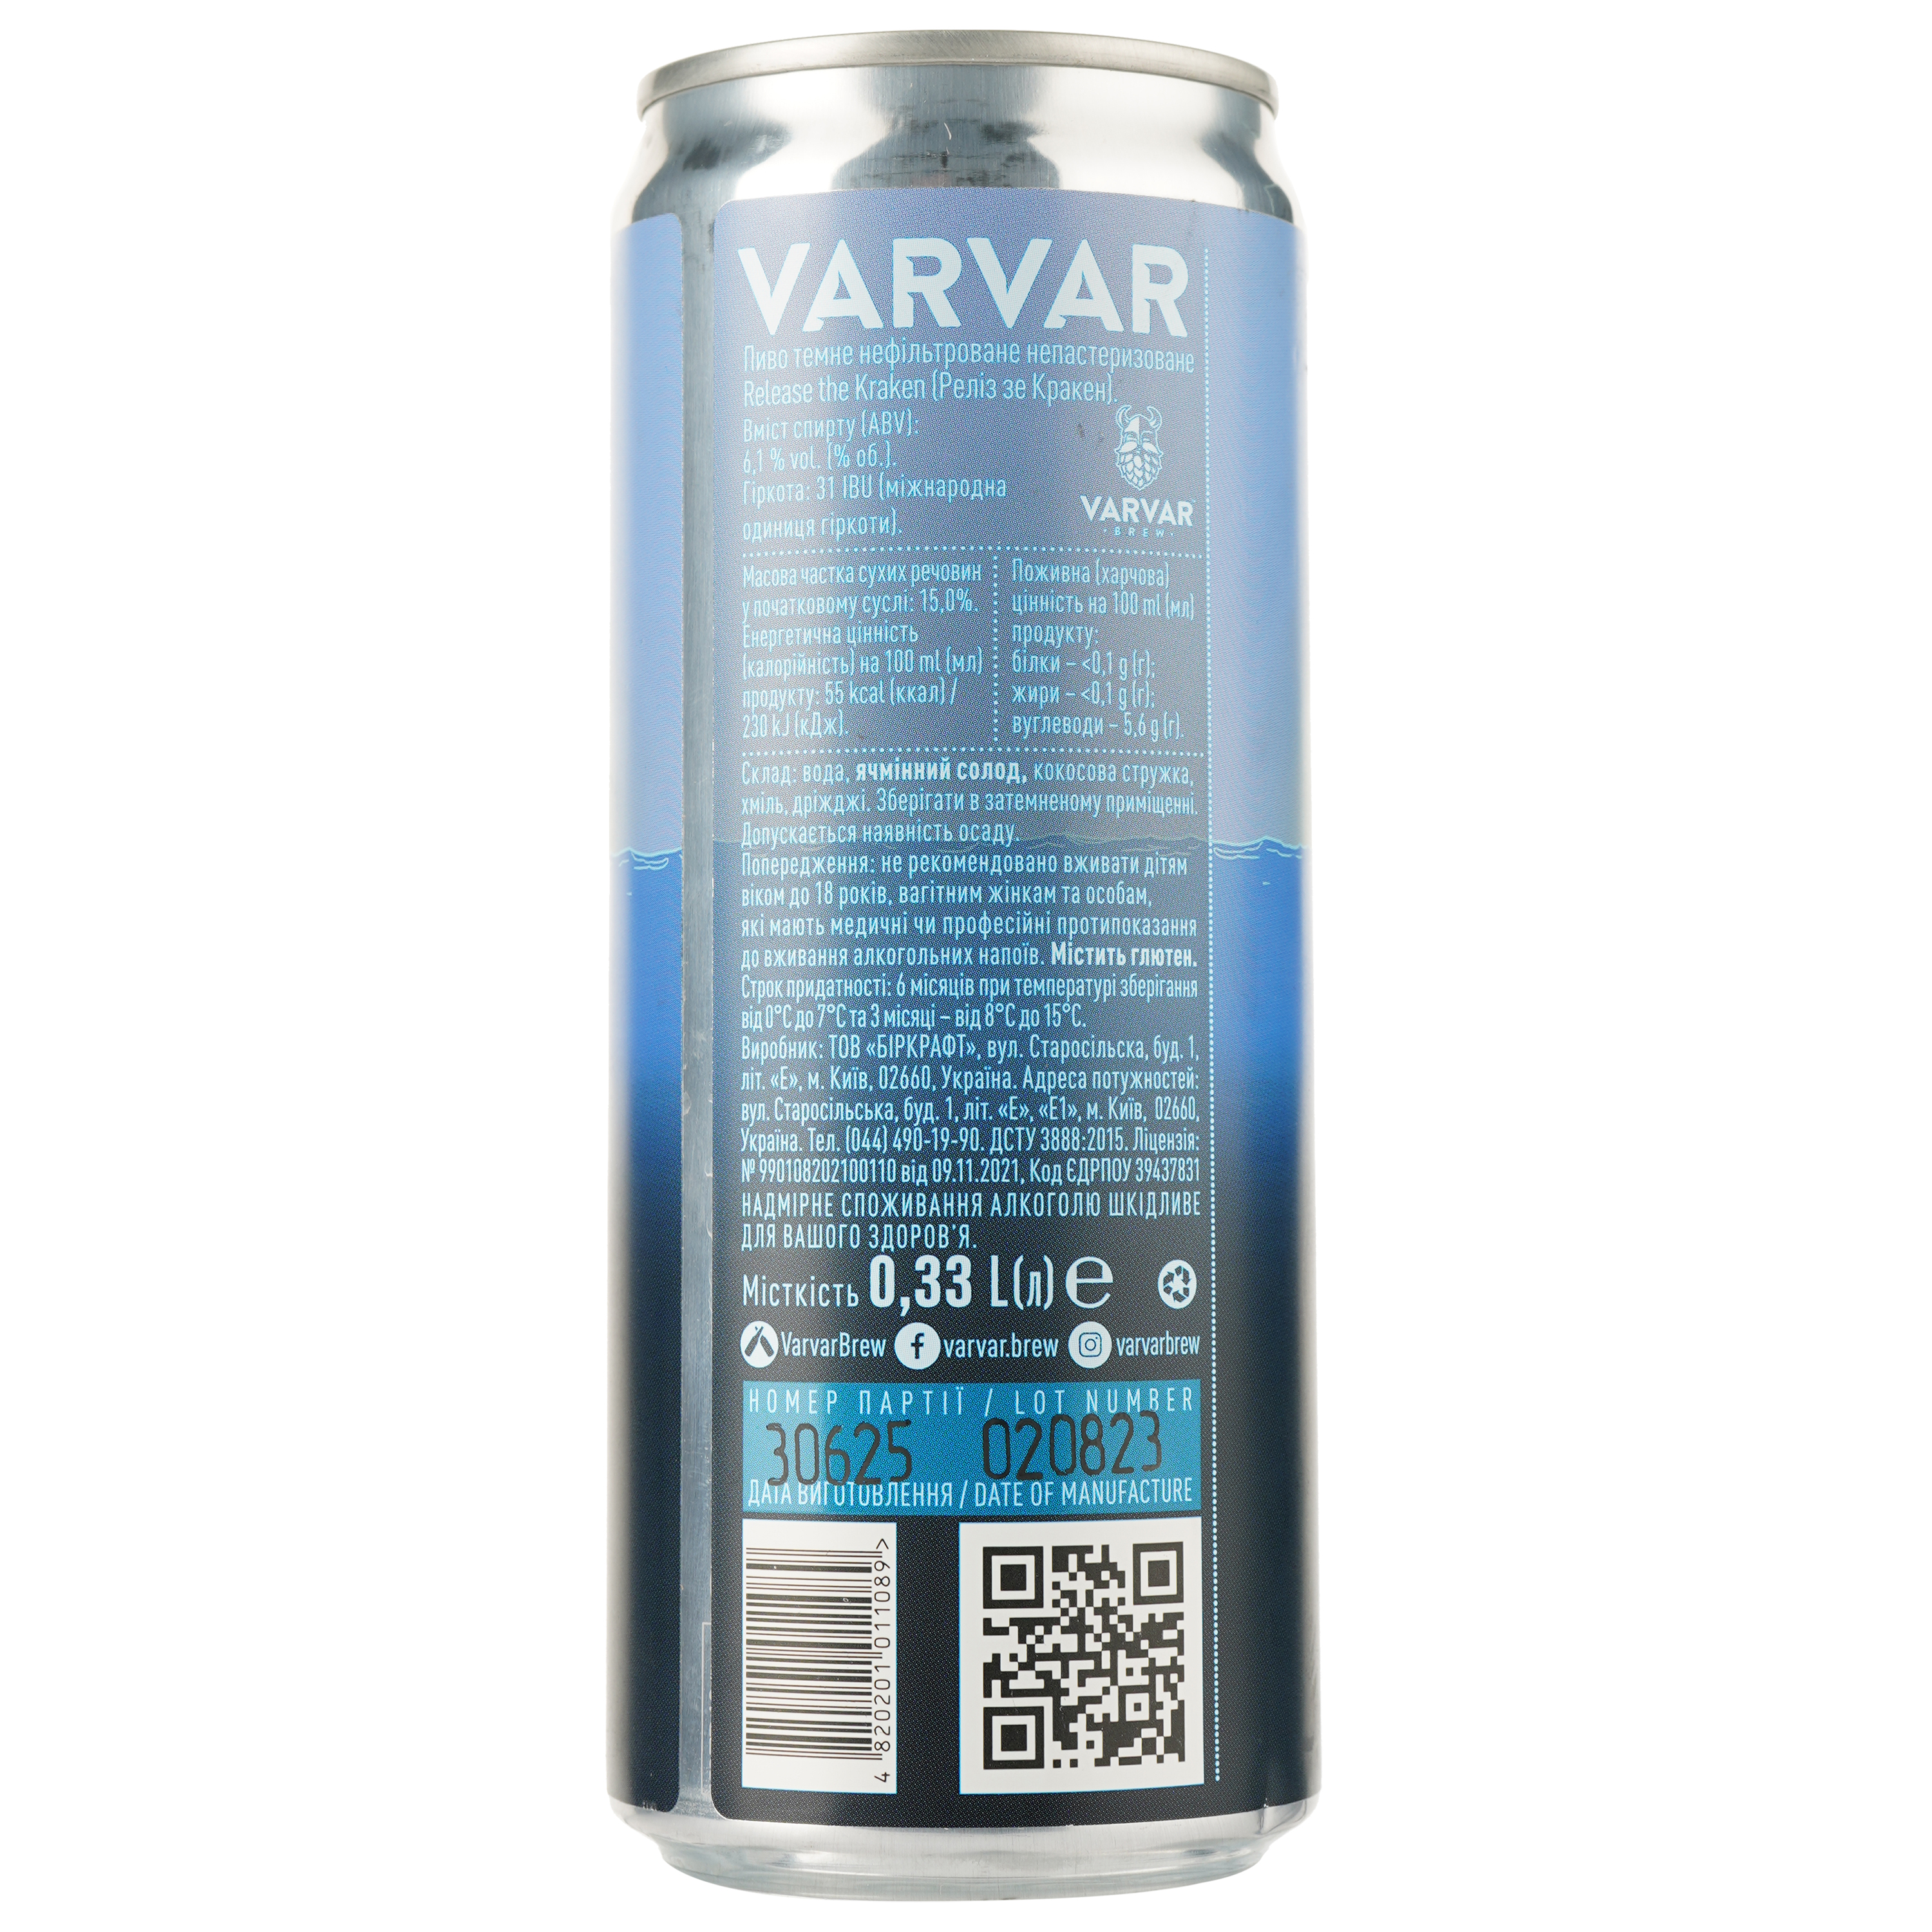 Пиво Varvar Release The Kraken, темное, 6,1%, ж/б, 0,33 л - фото 2